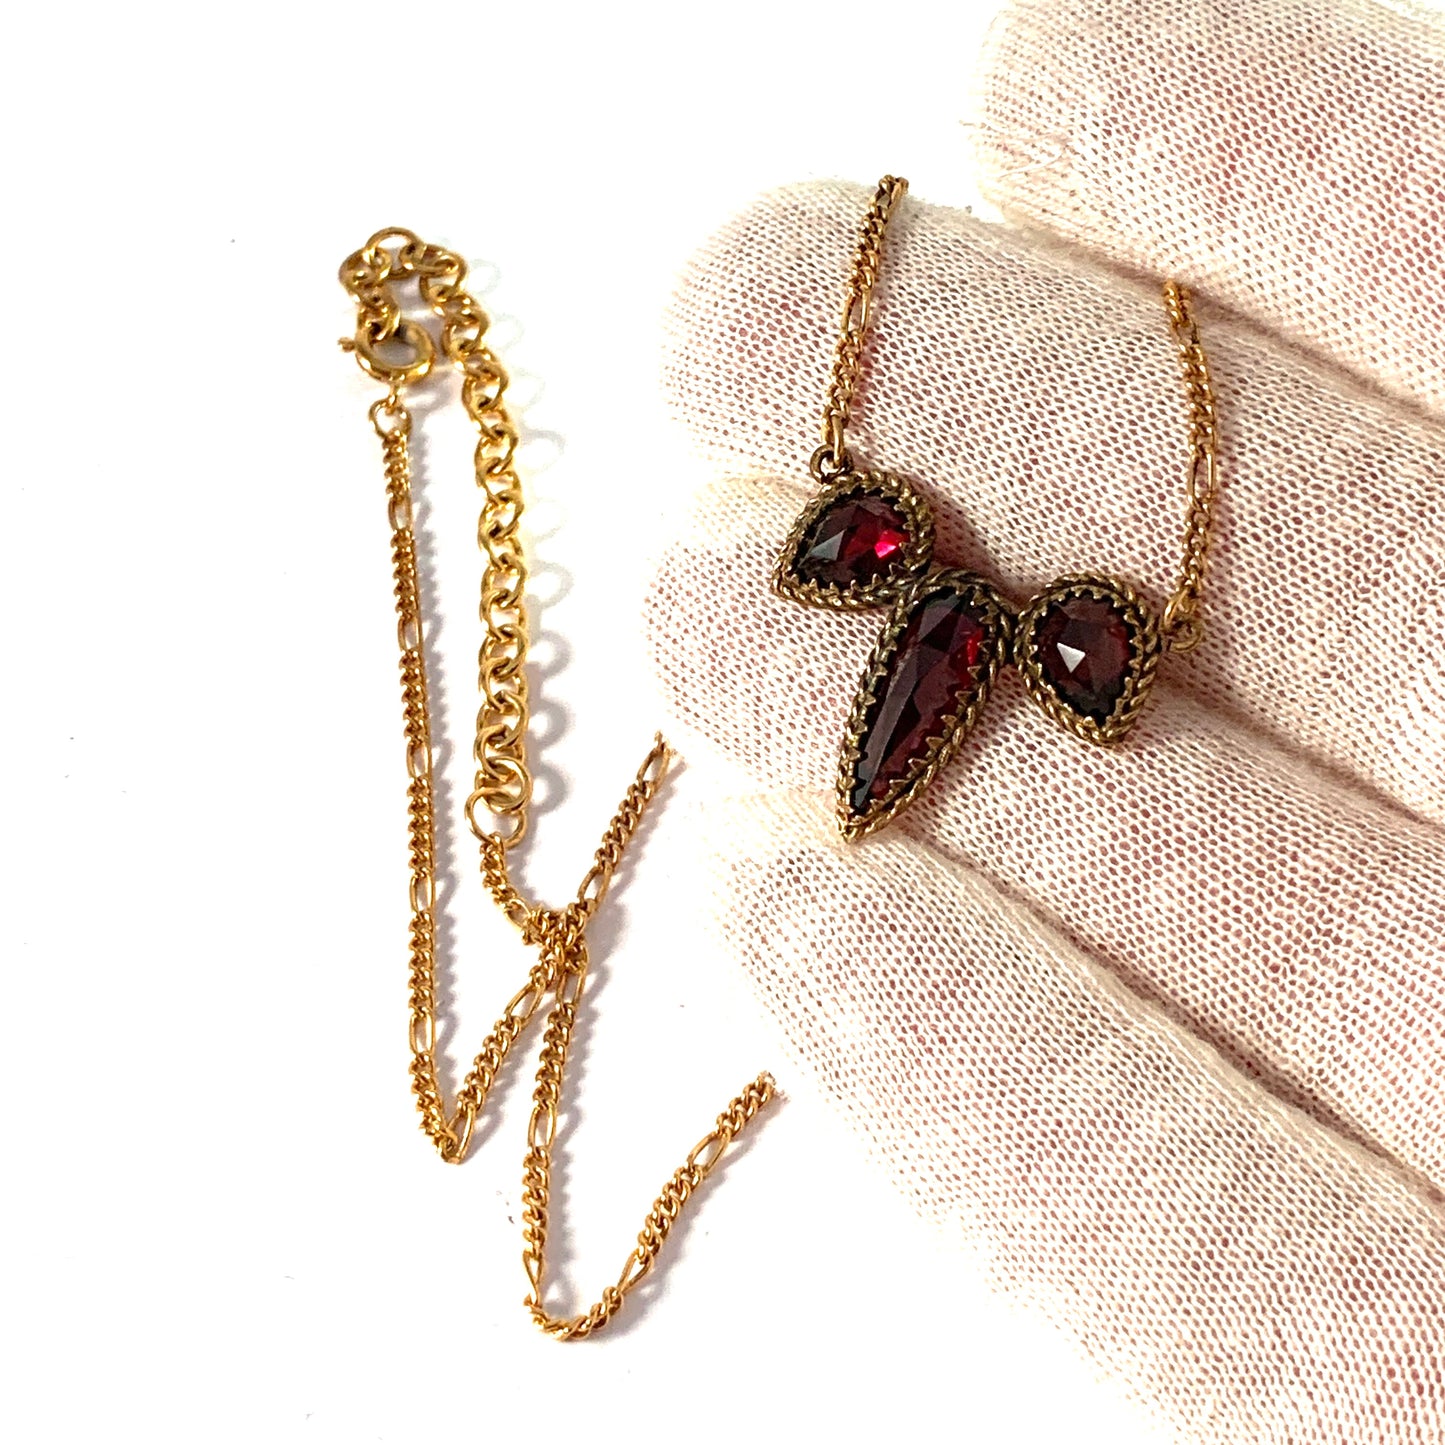 Vintage Mid Century Bohemian Garnet Gilt Metal Necklace.